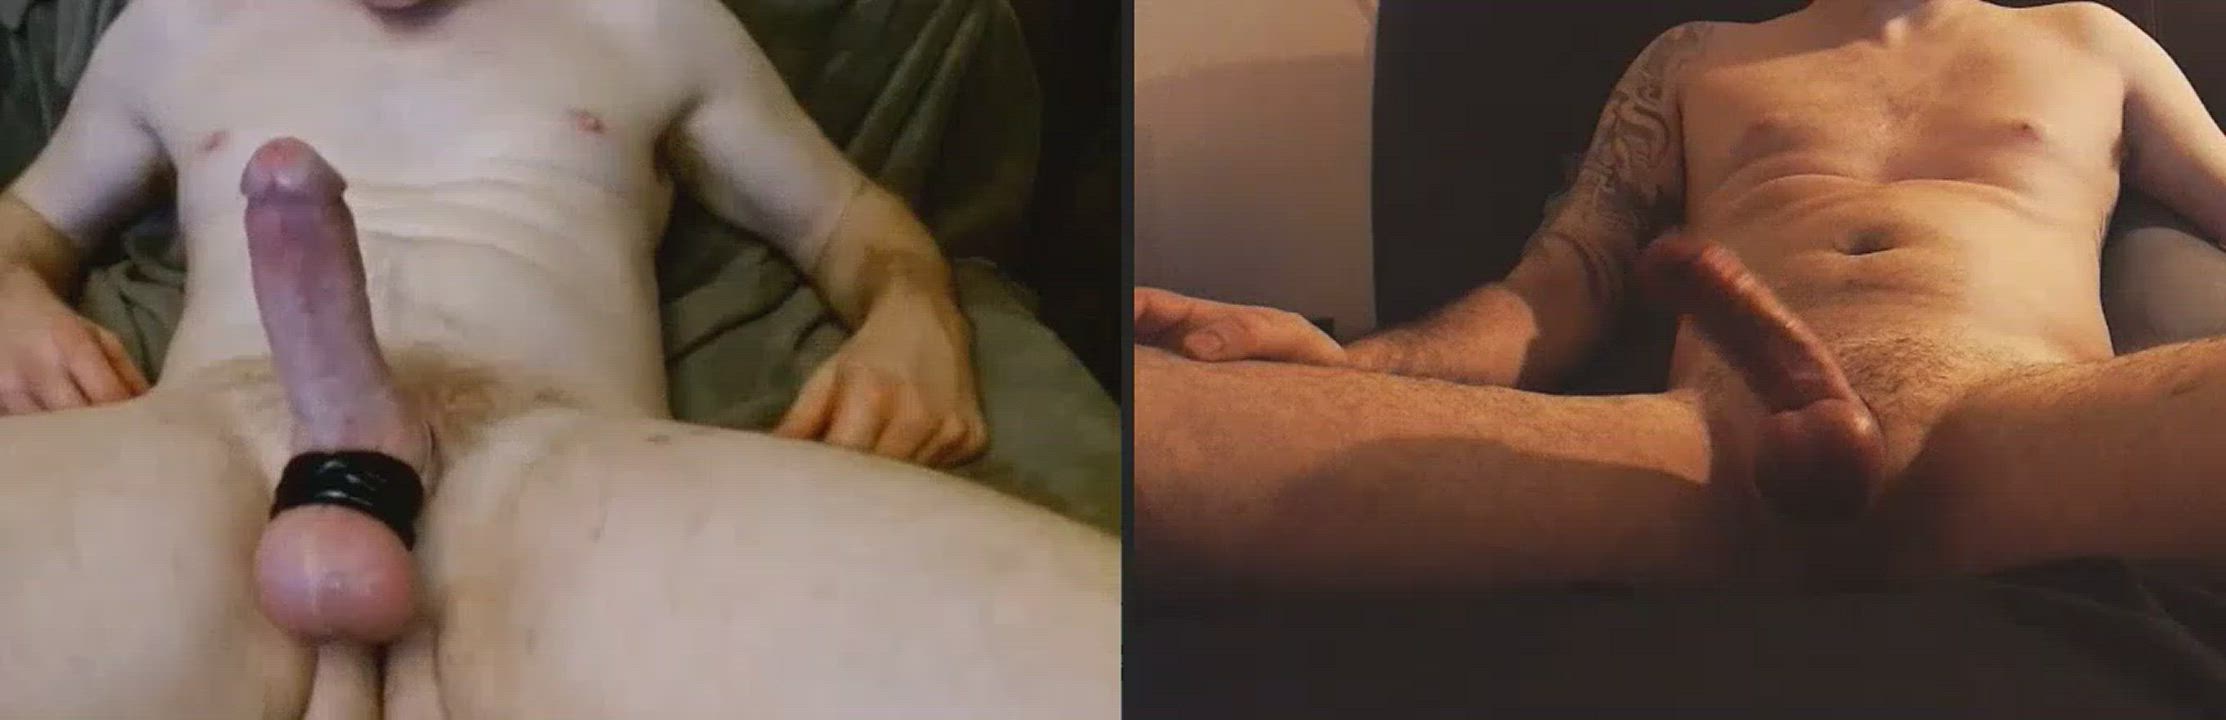 bwc big dick bisexual cam edging gay jerk off pulsating thick cock webcam gif